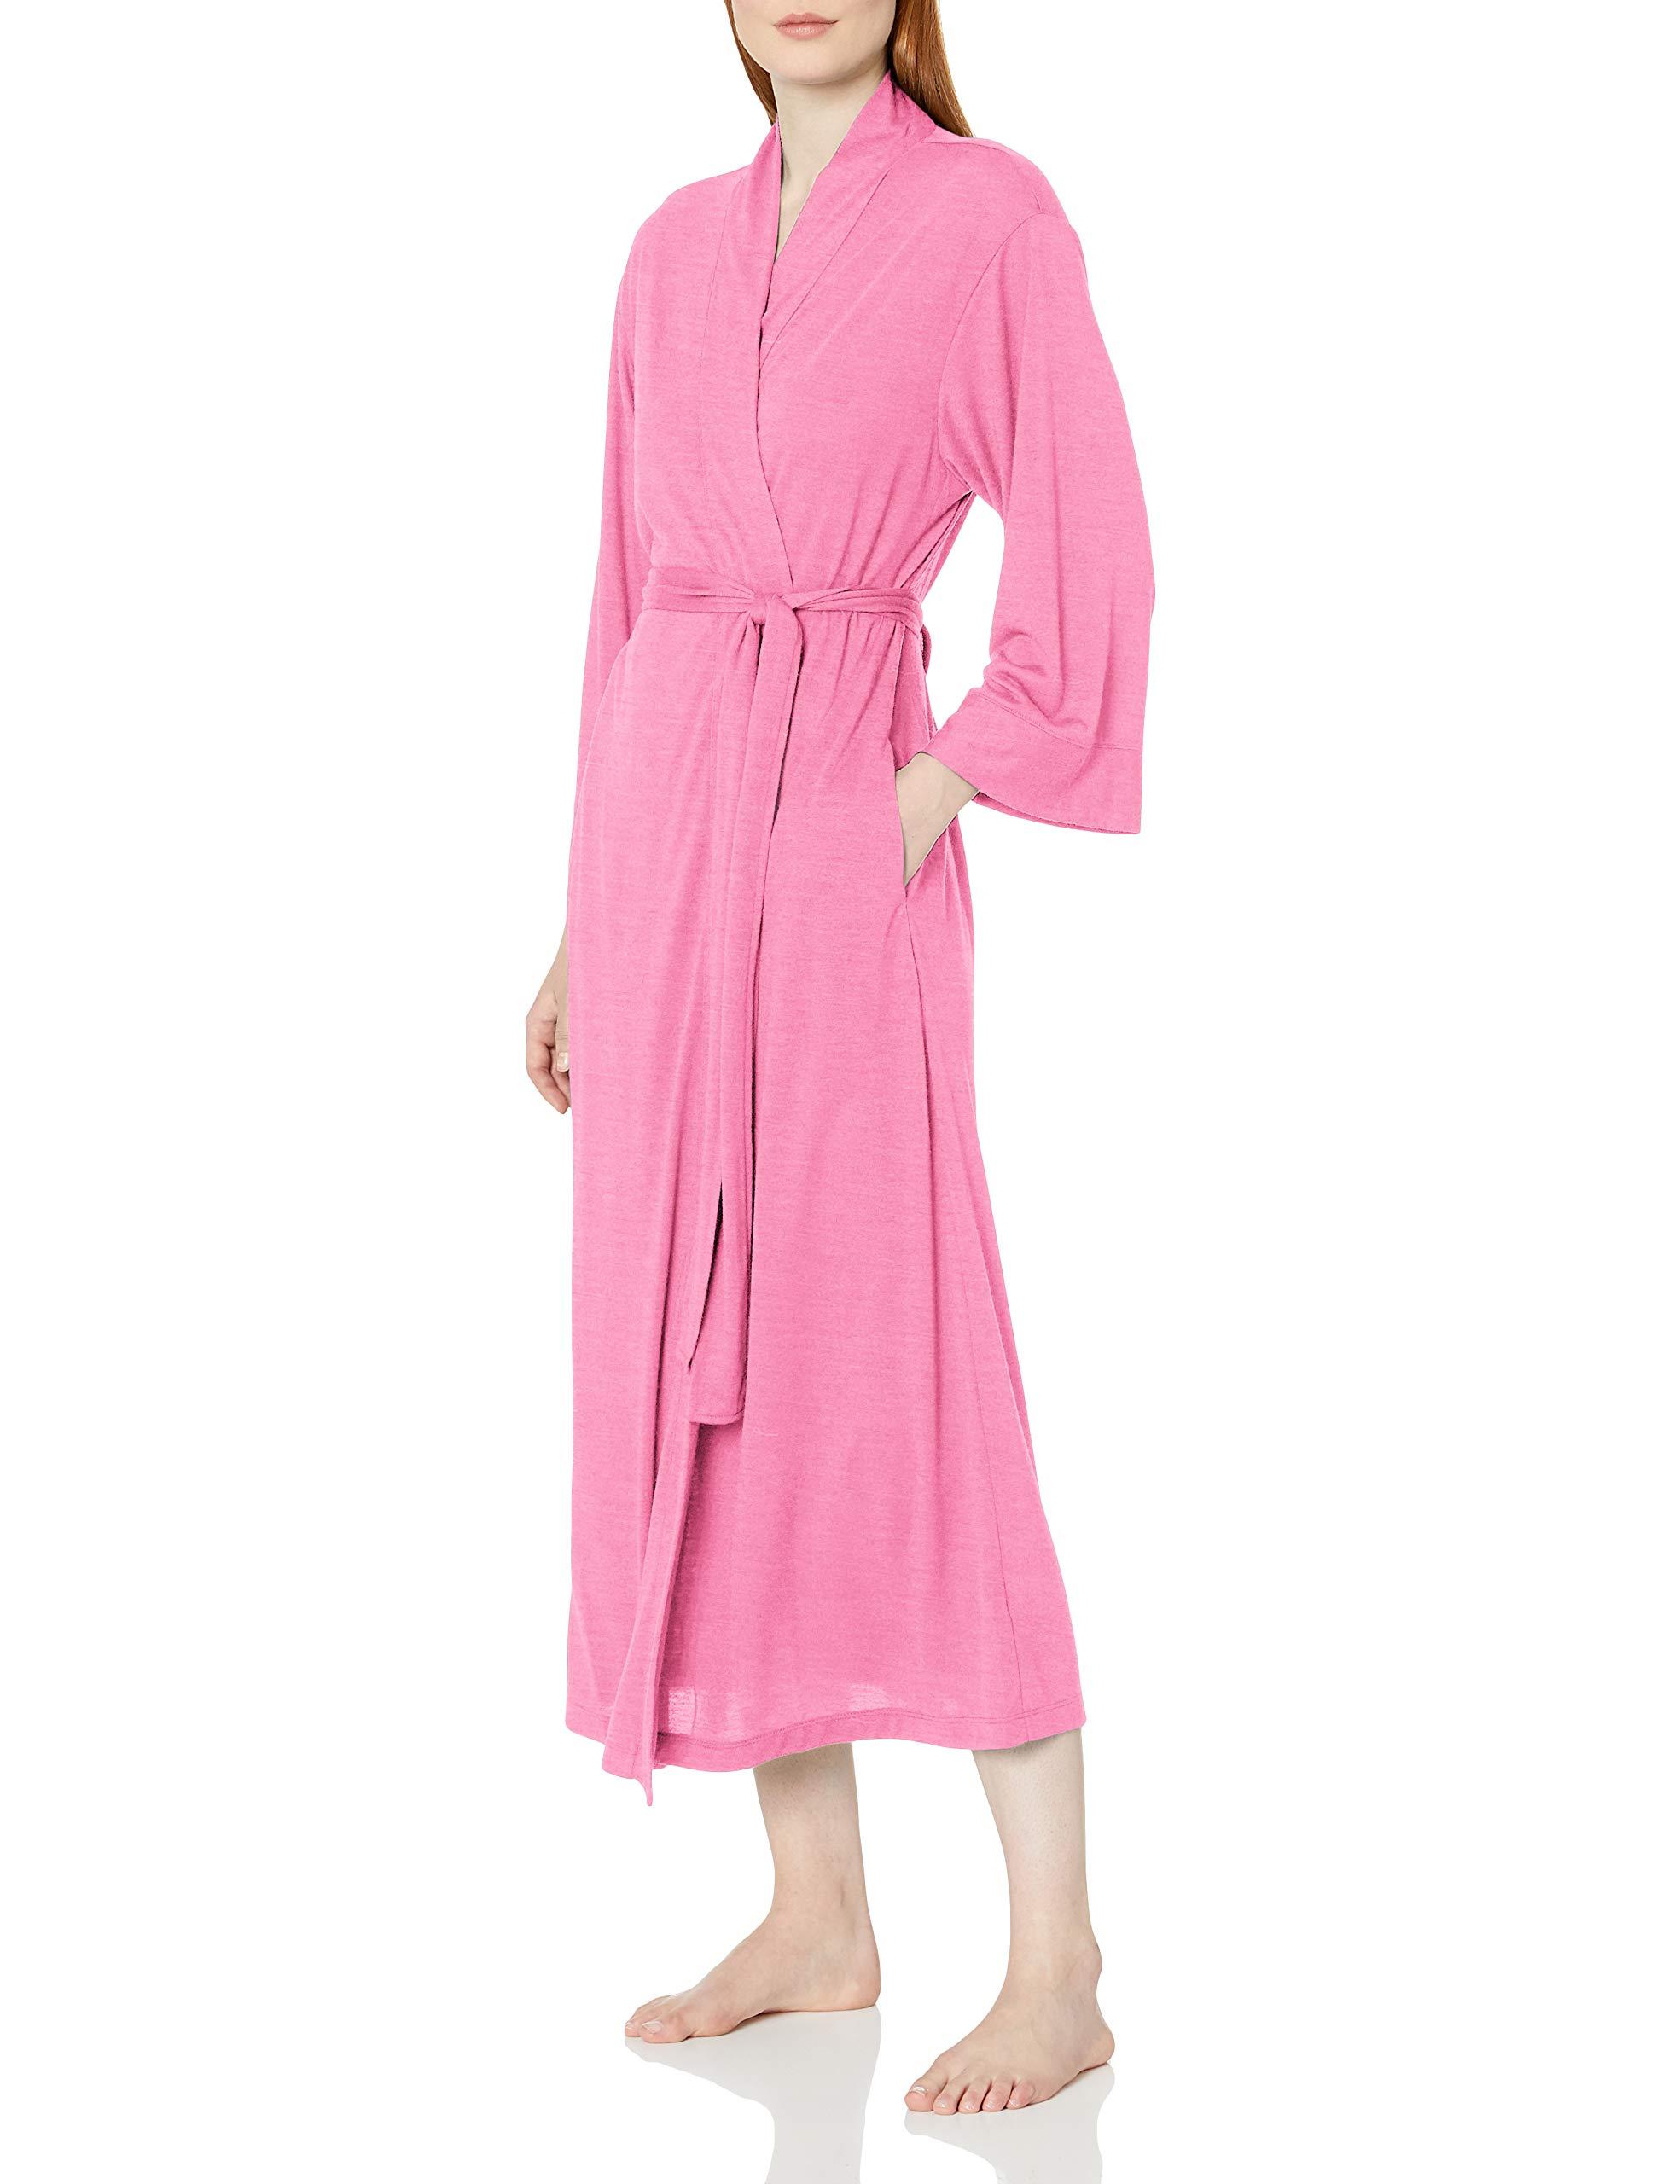 N Natori Robe in Pink - Lyst